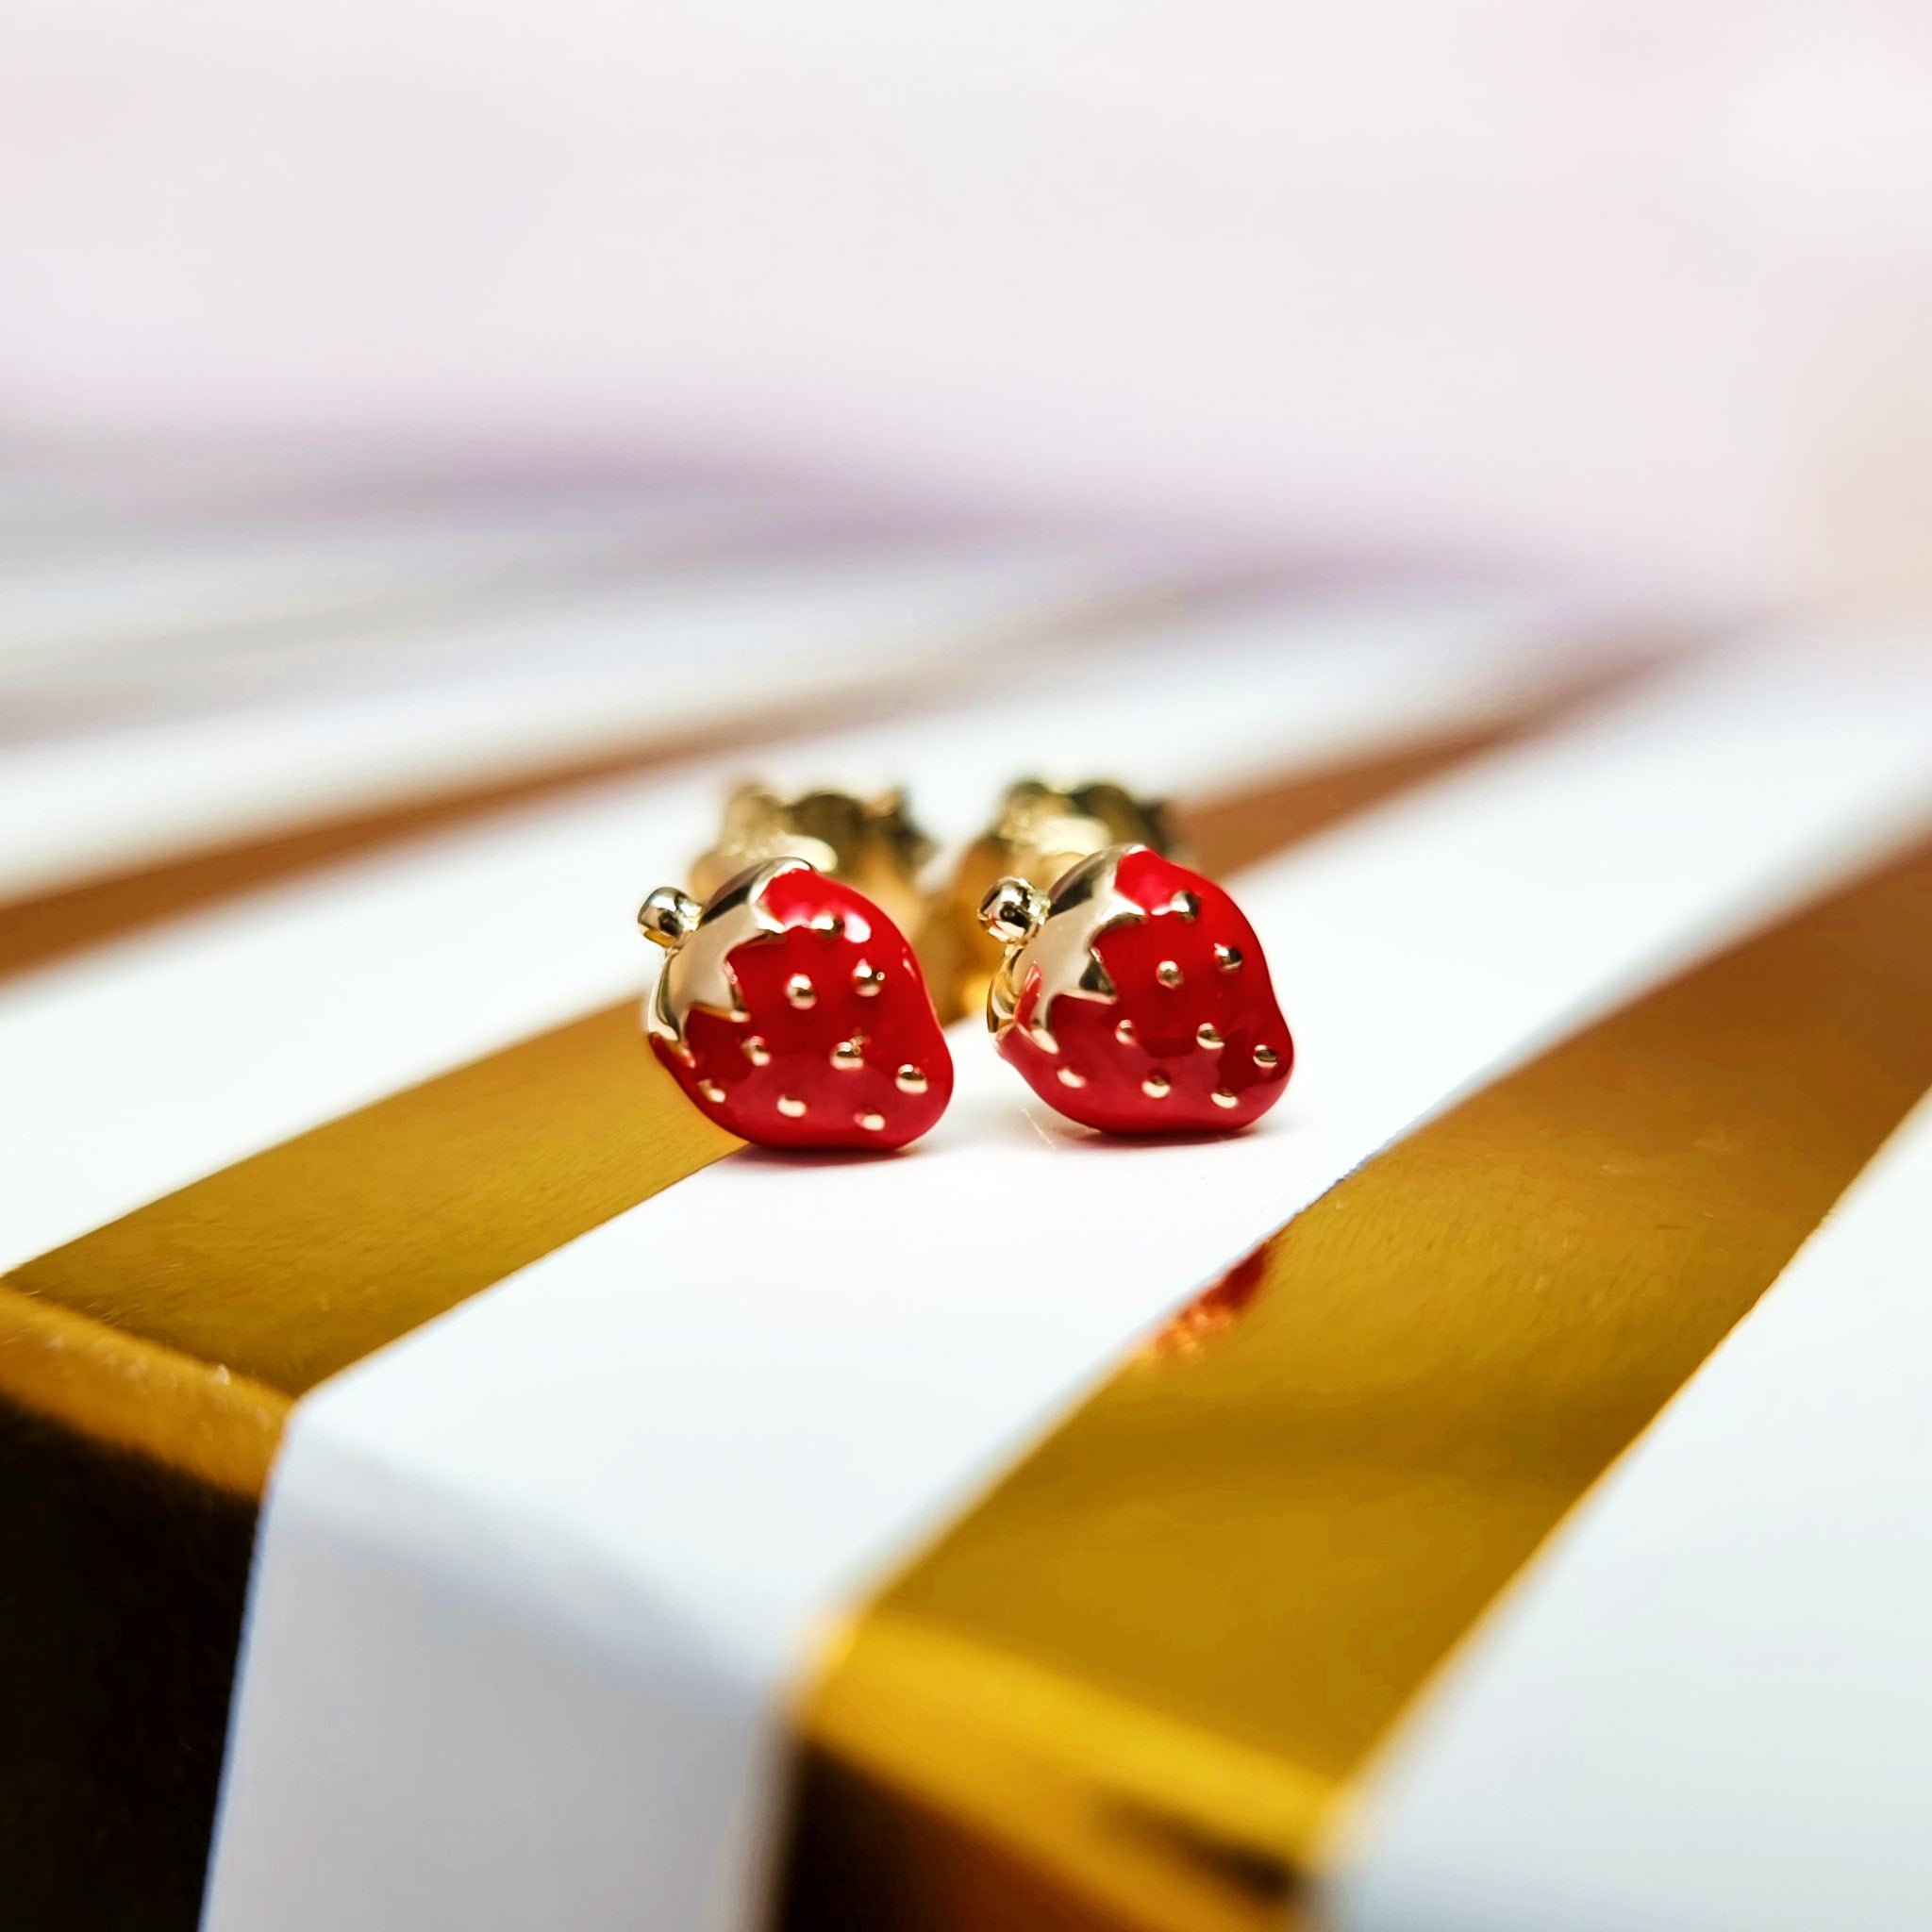 Light Weight Gold Earring Designs for Girls || Stylish Gold Earring  Collections || | Gold earrings designs, Designer earrings, Gold earrings  for women